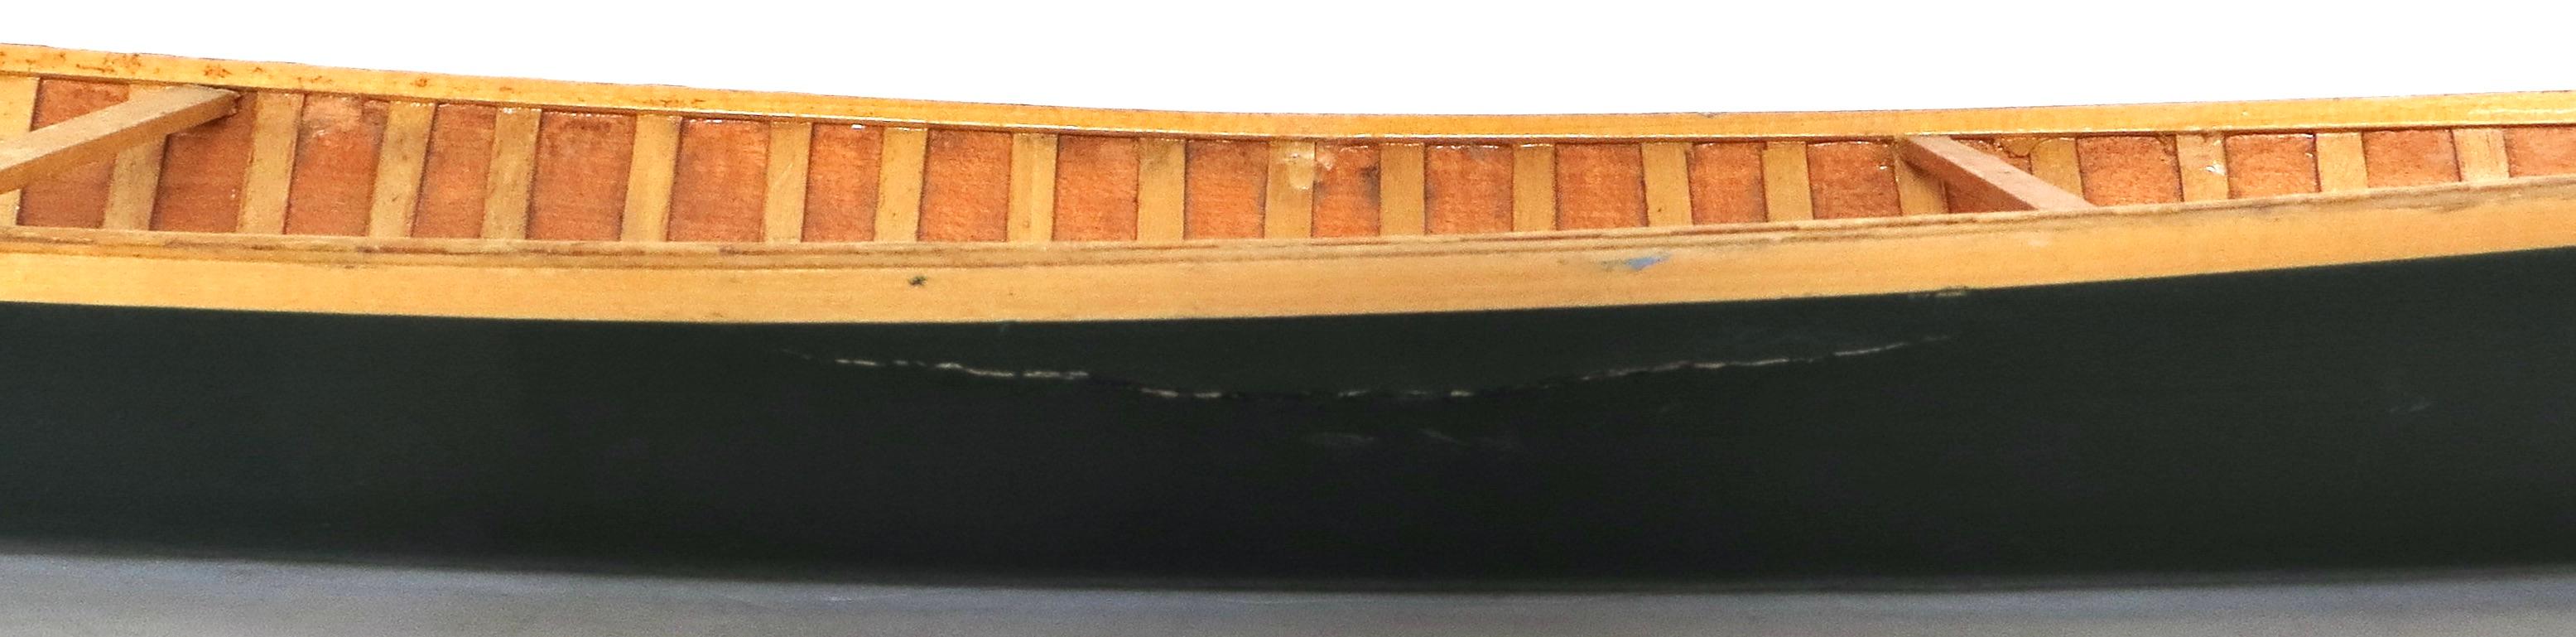 Miniature Model Wooden Canoe, American Circa 1950's For Sale 3